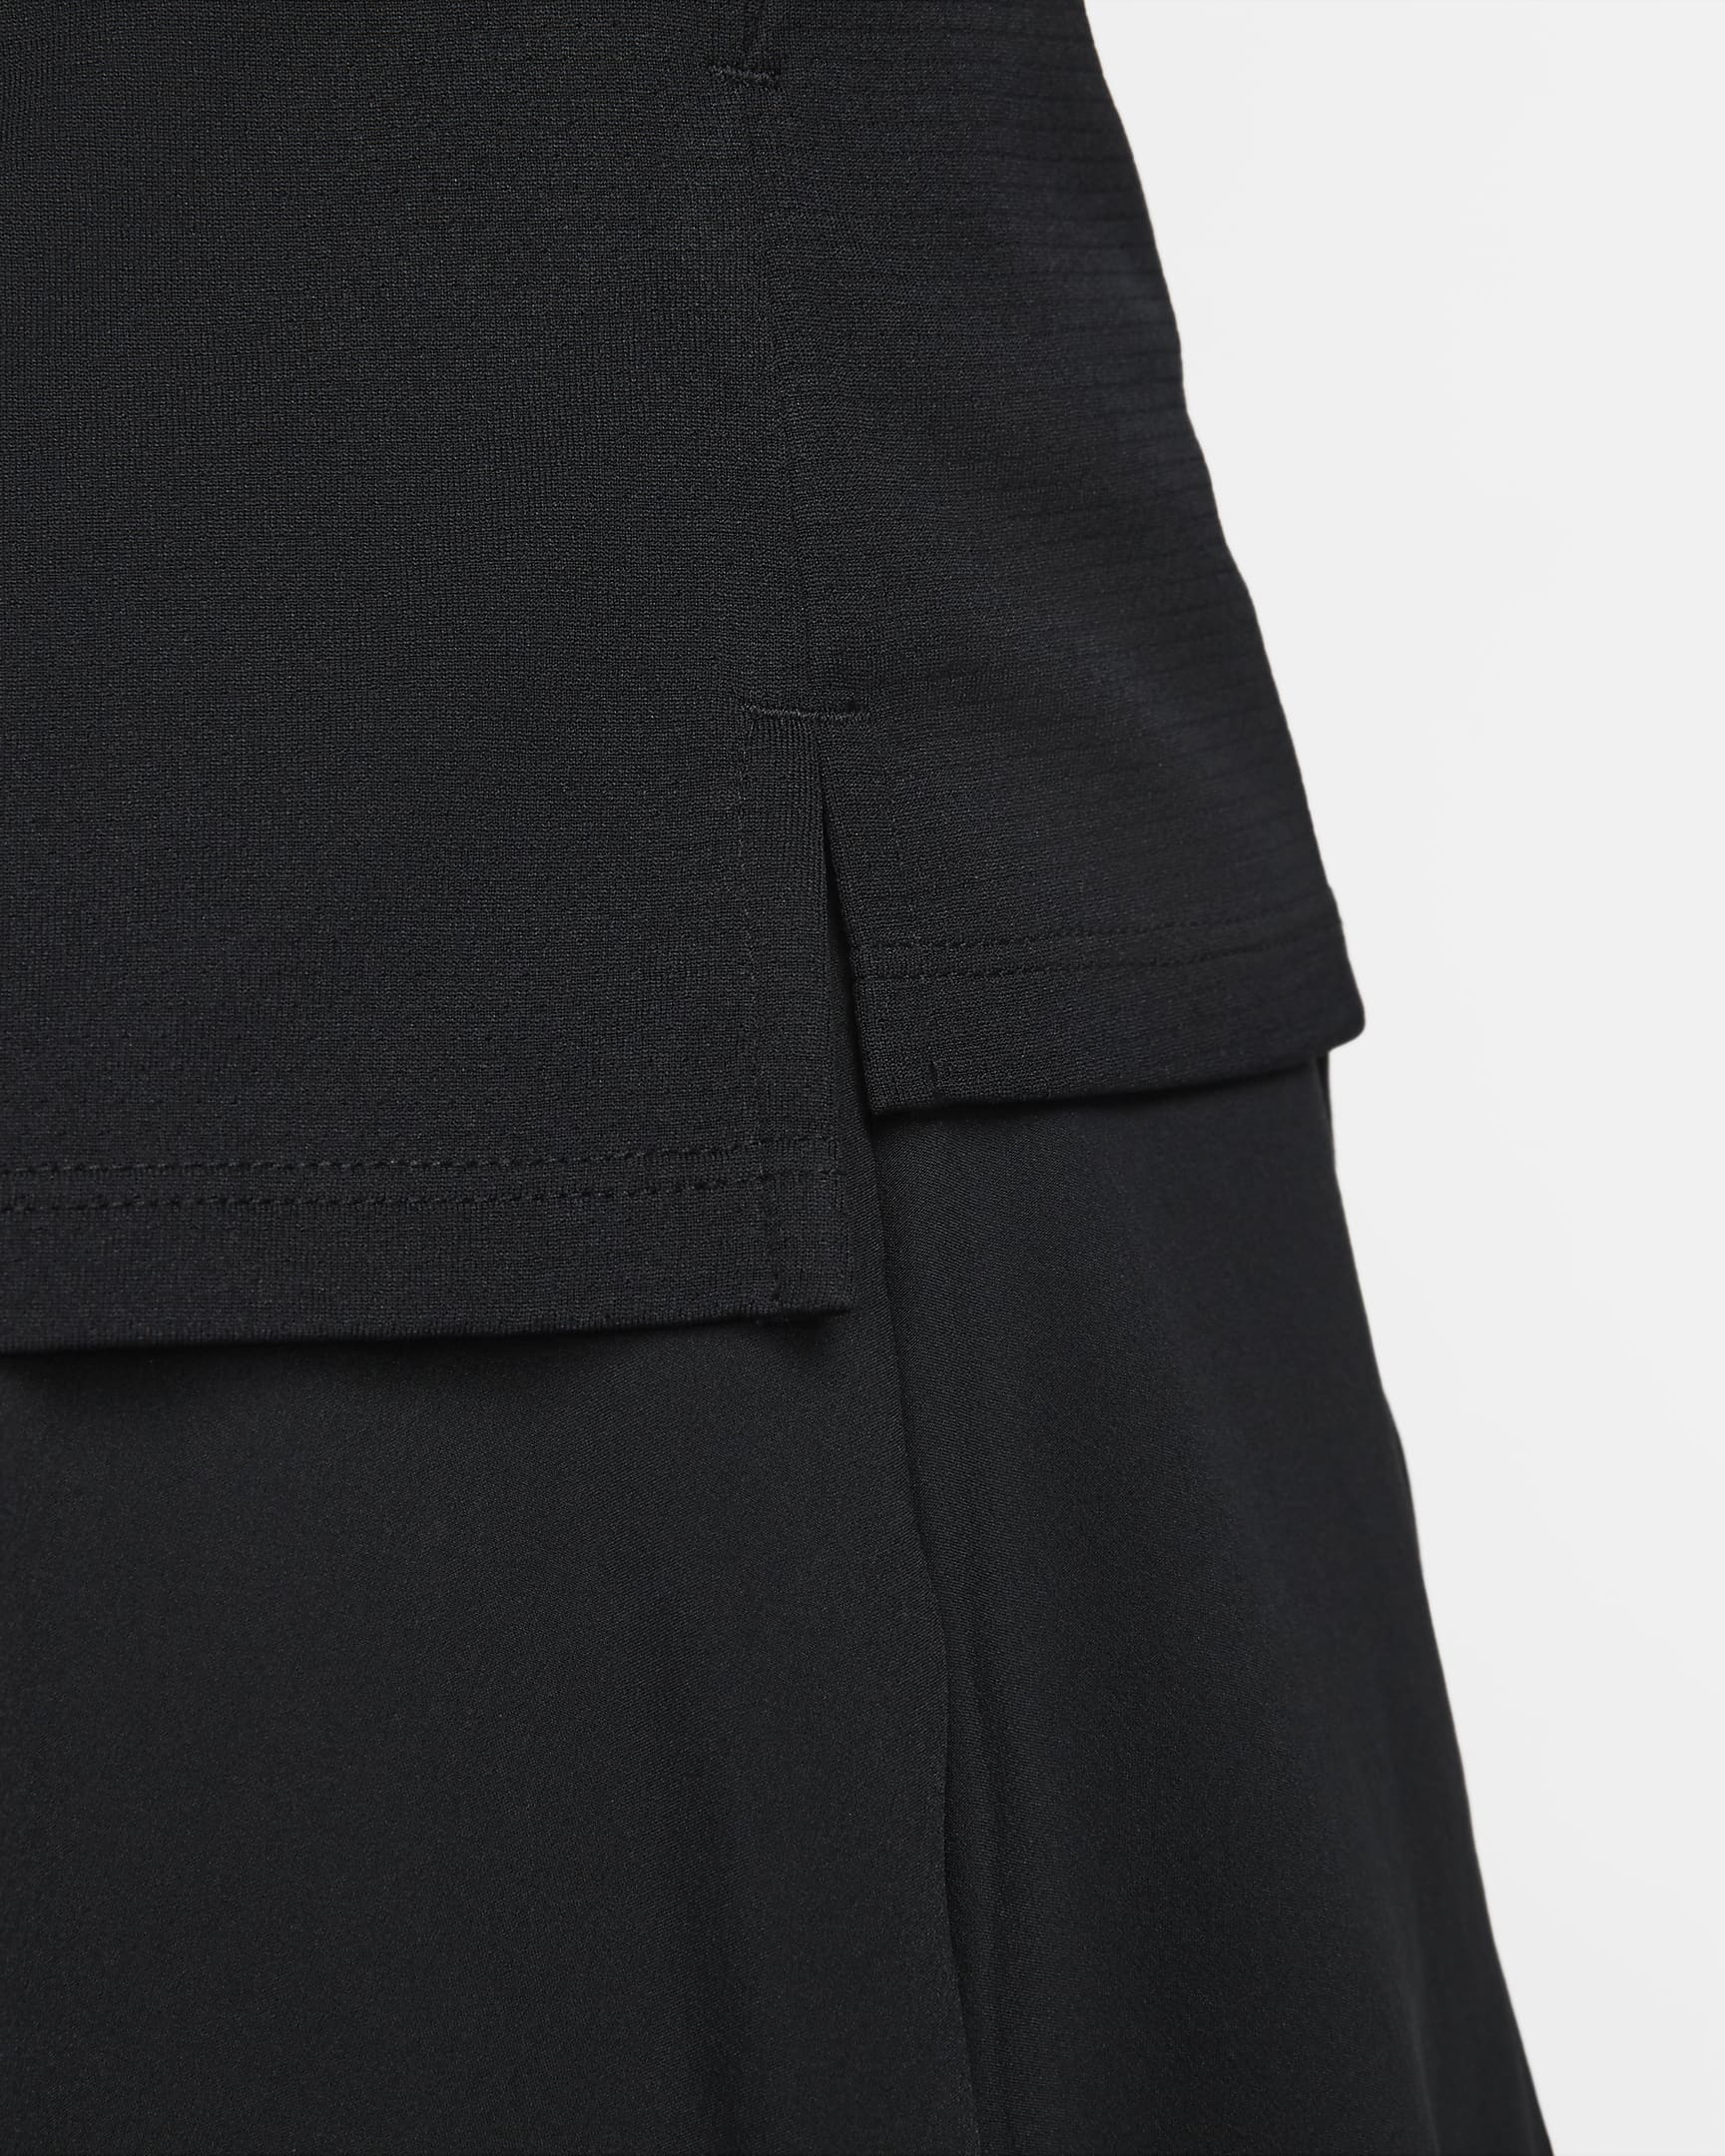 Nike Dri-FIT UV Advantage Women's Full-Zip Top - Black/White